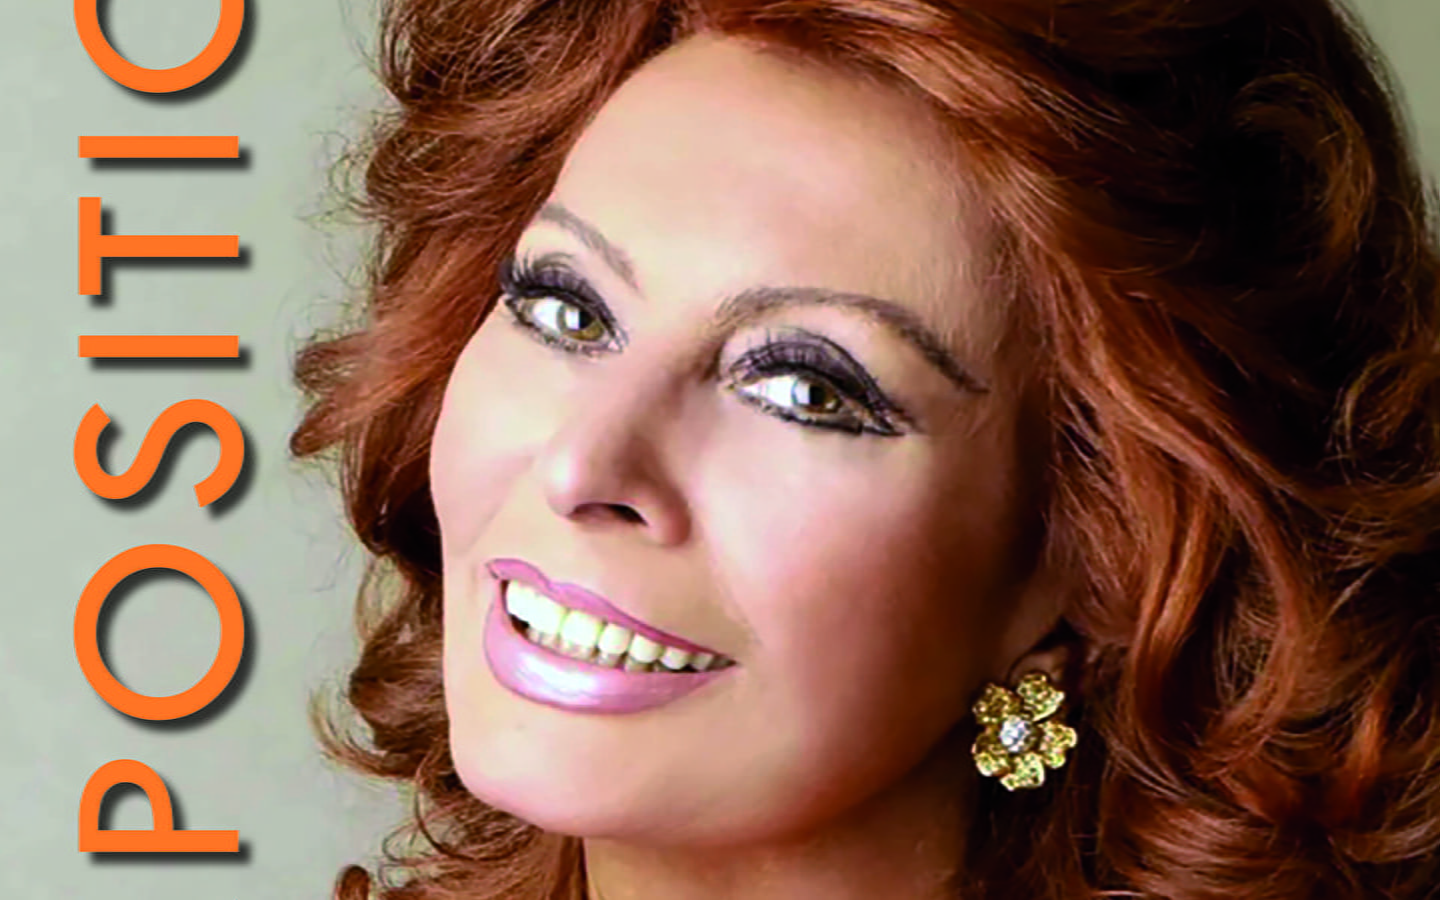 Exhibition - A tribute to Sophia Loren